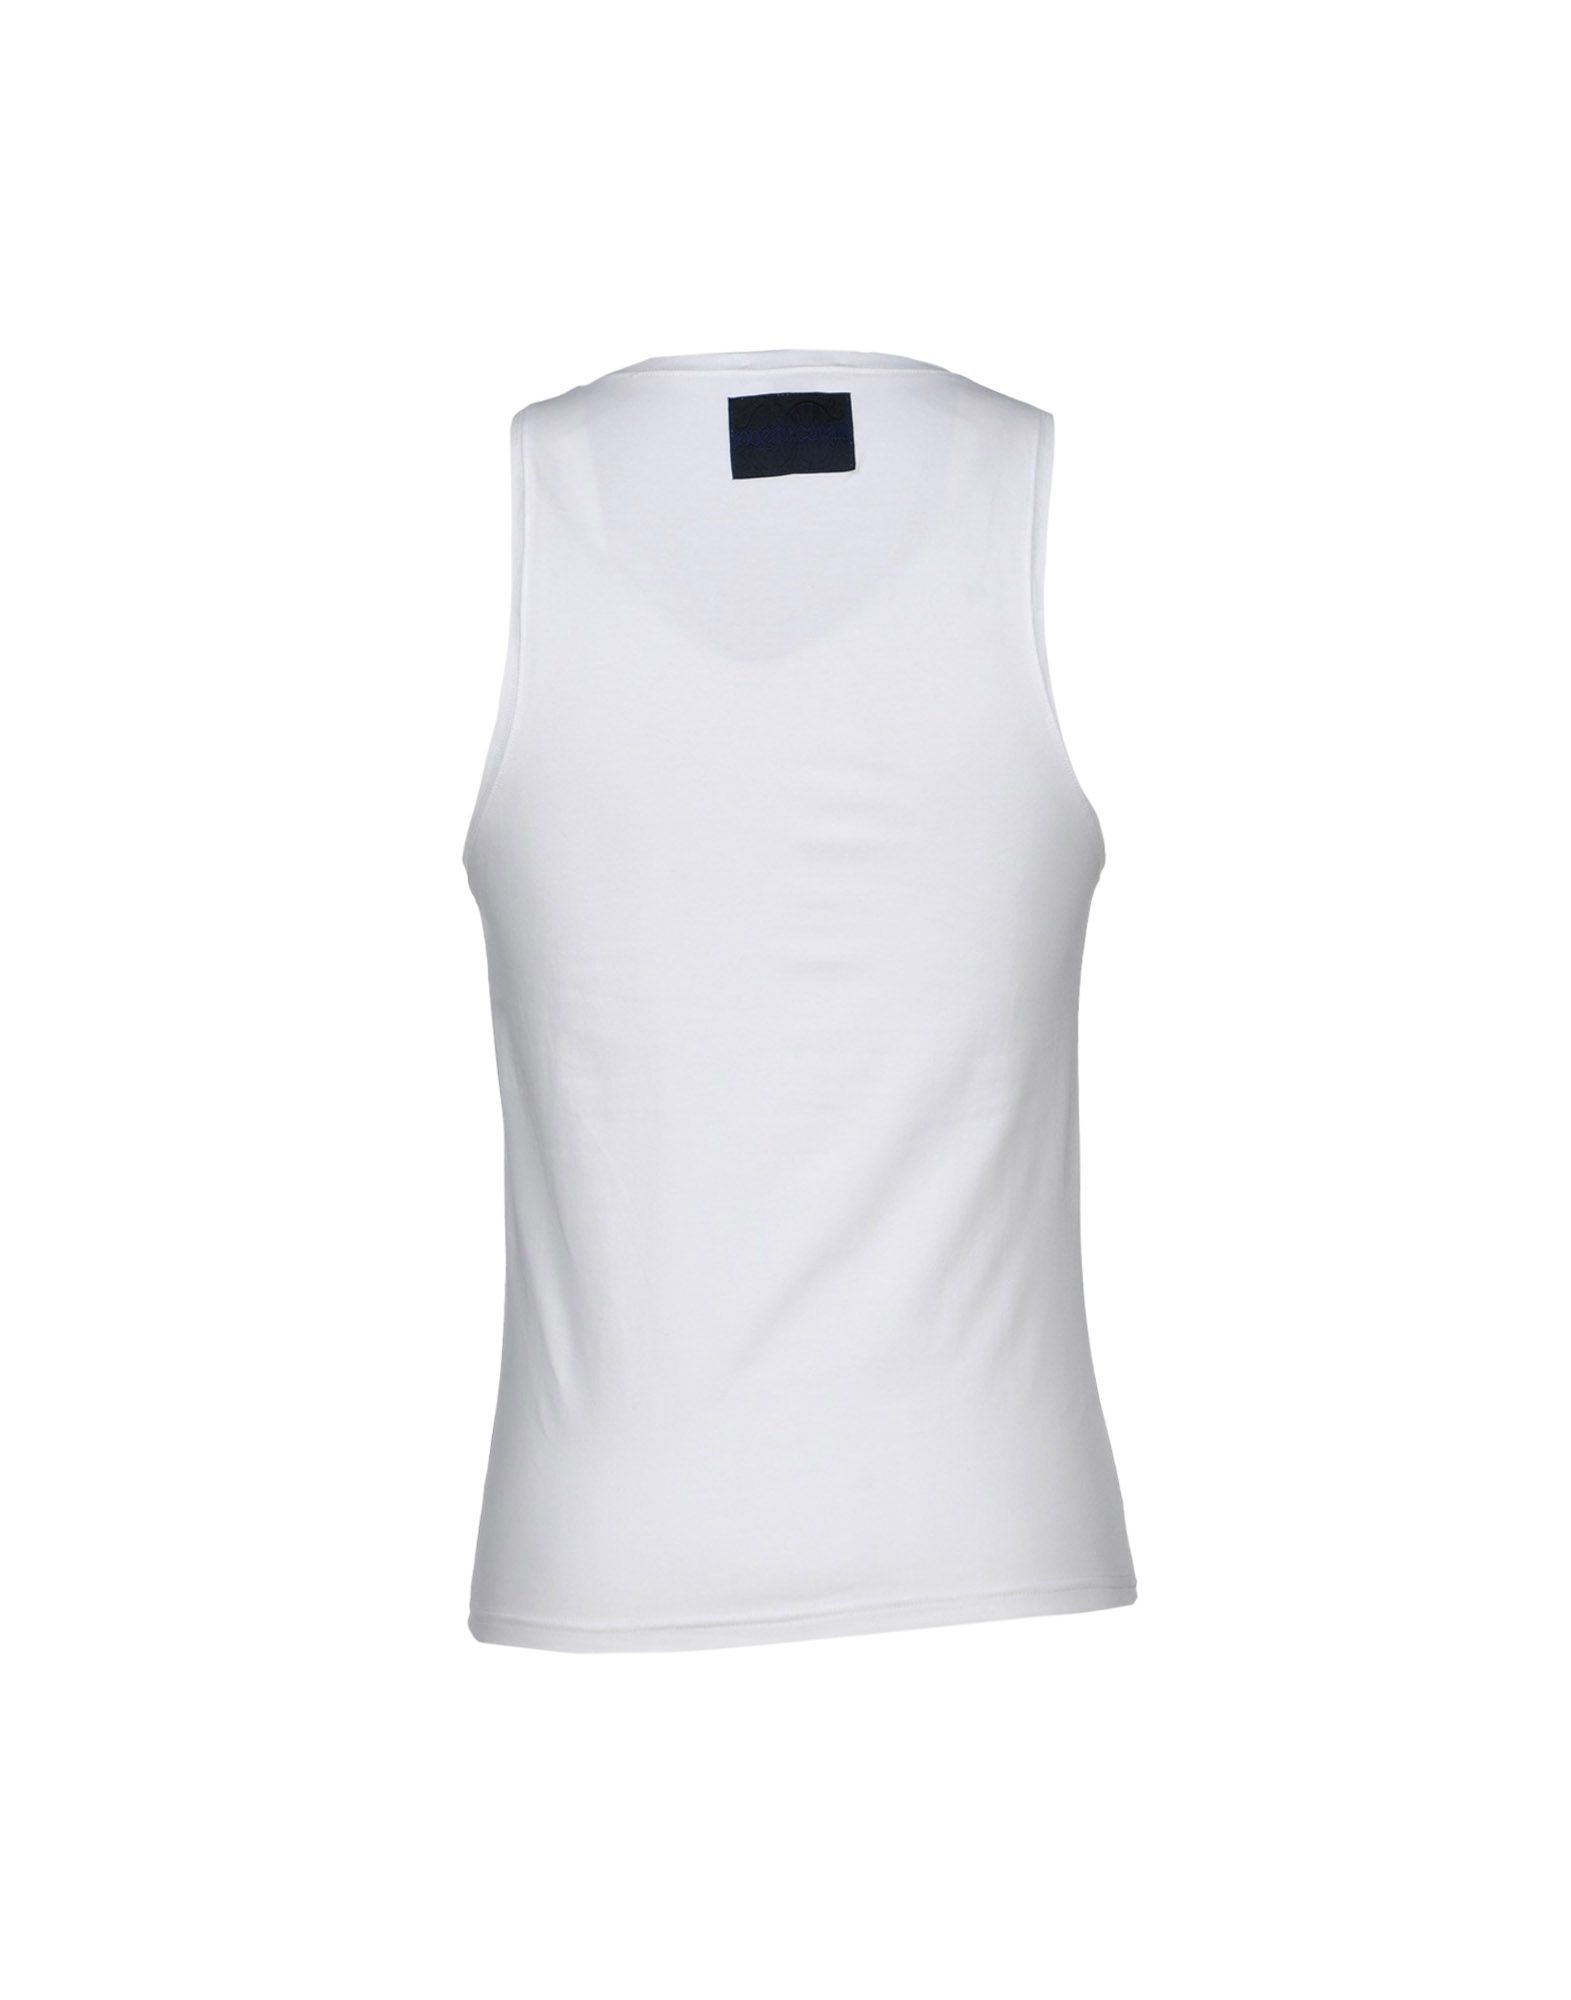 Lyst - Roberto Cavalli Sleeveless Undershirt in White for Men